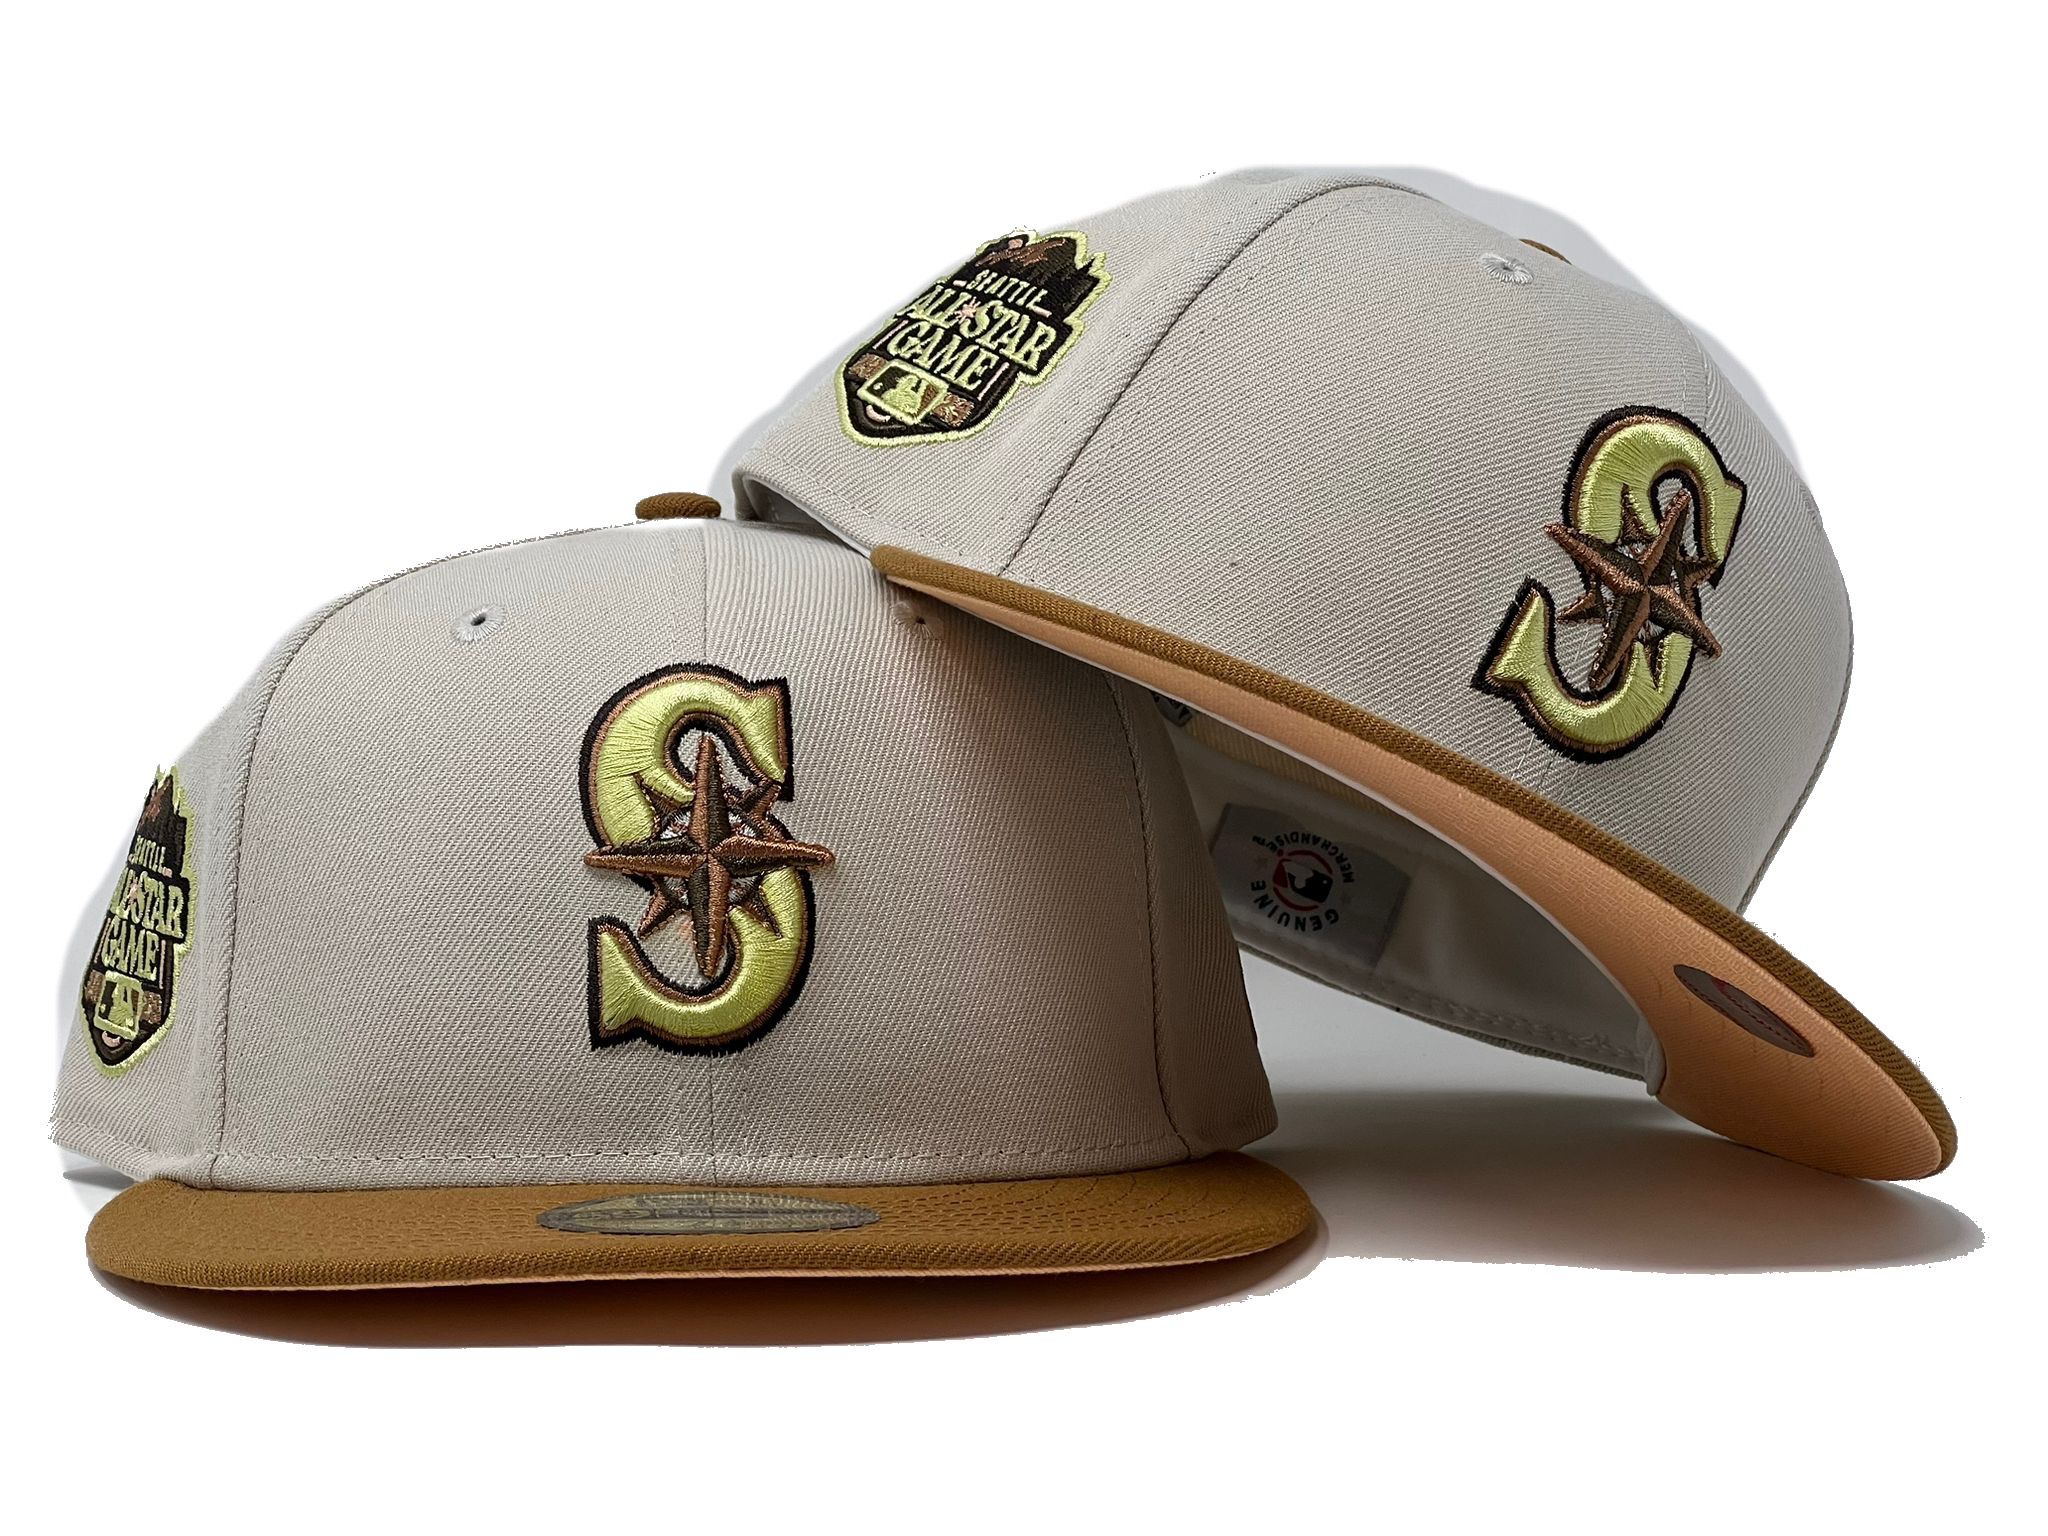 AllStar Game MLB Fan Cap Hats for sale  eBay